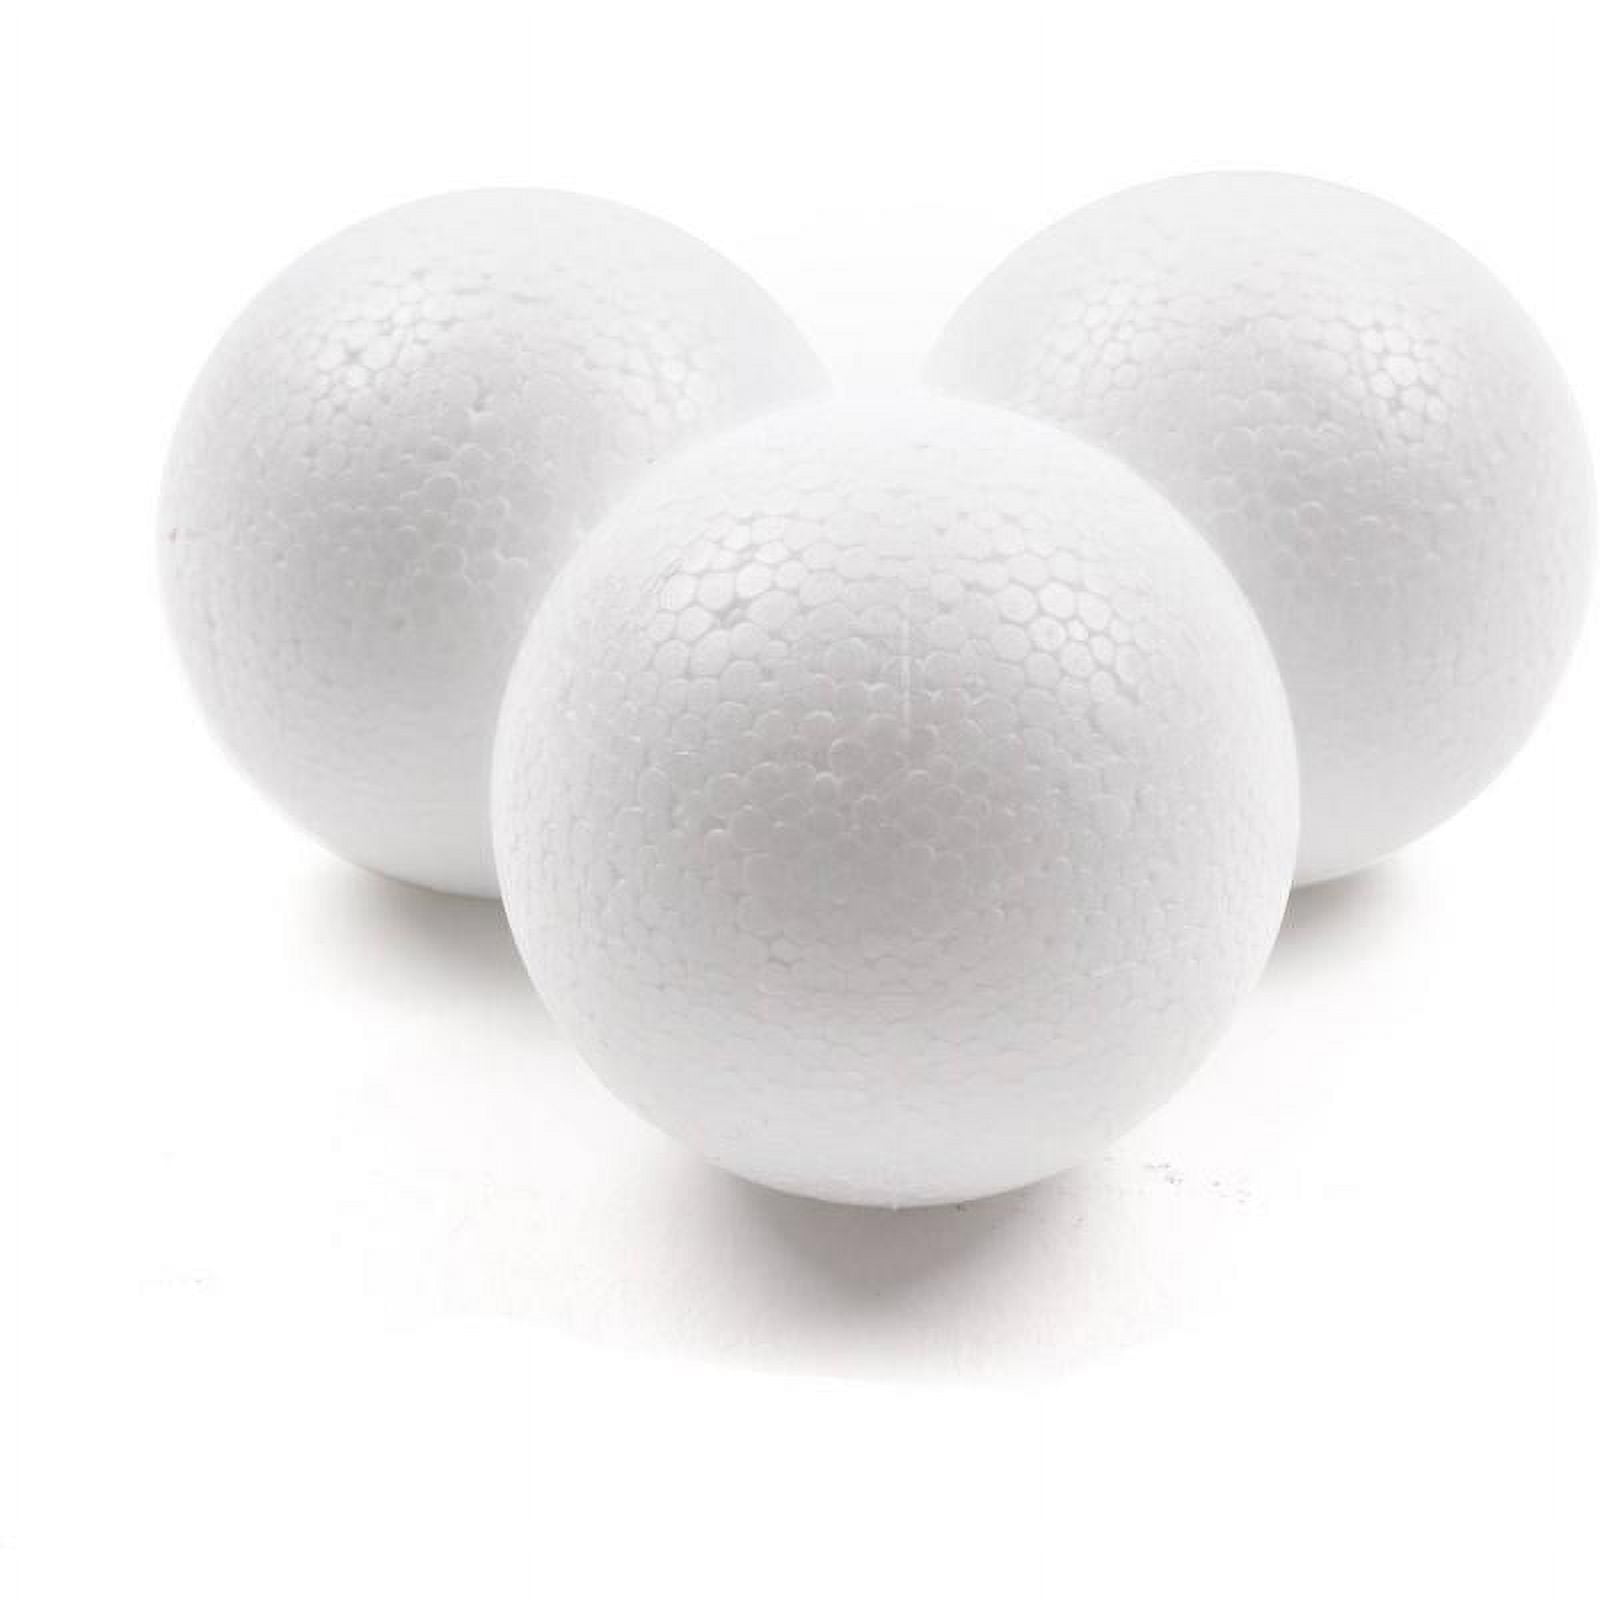 4 ct Foam Balls 4 Round White Polystyrene Styrene Forms Sphere Art Craft  C096